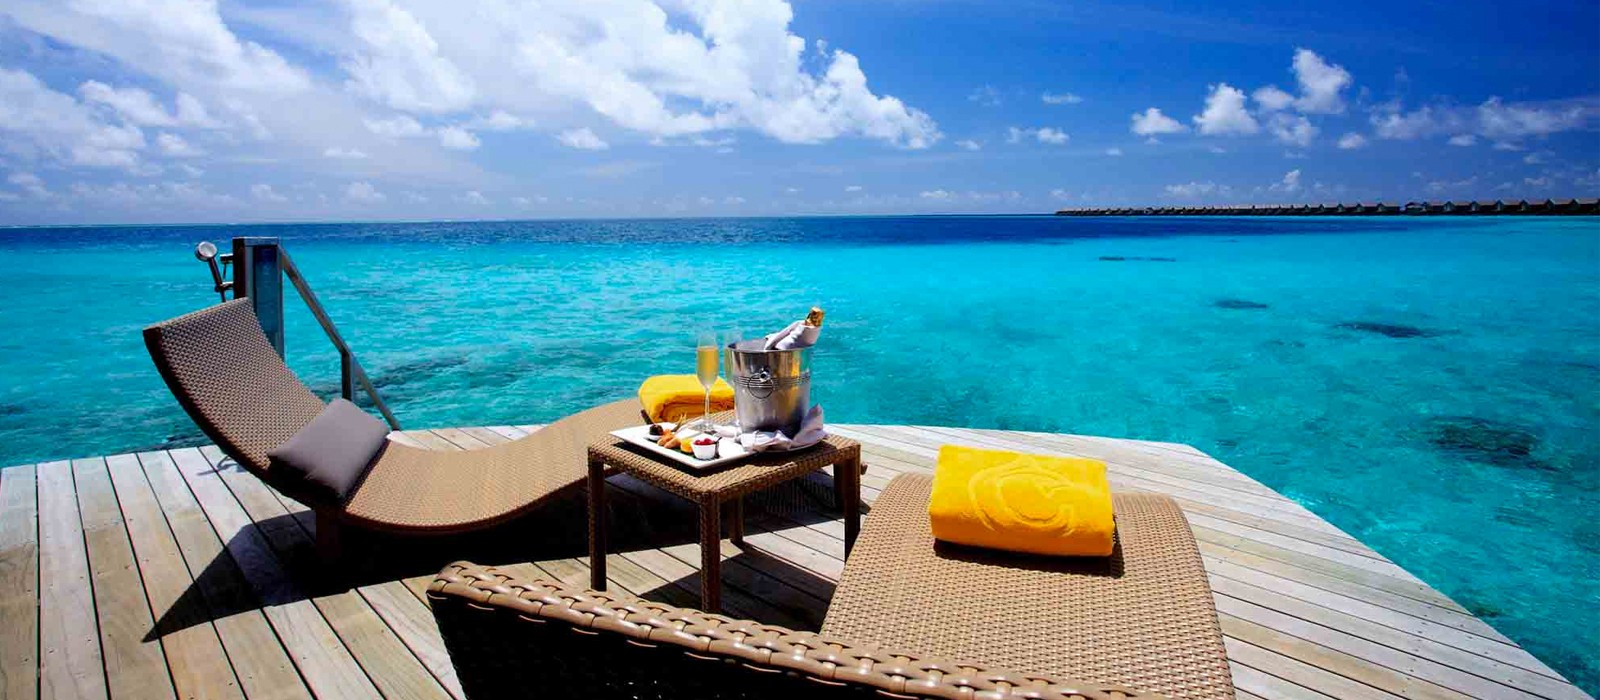 header - centara ras fushi - luxury maldives holiday packages